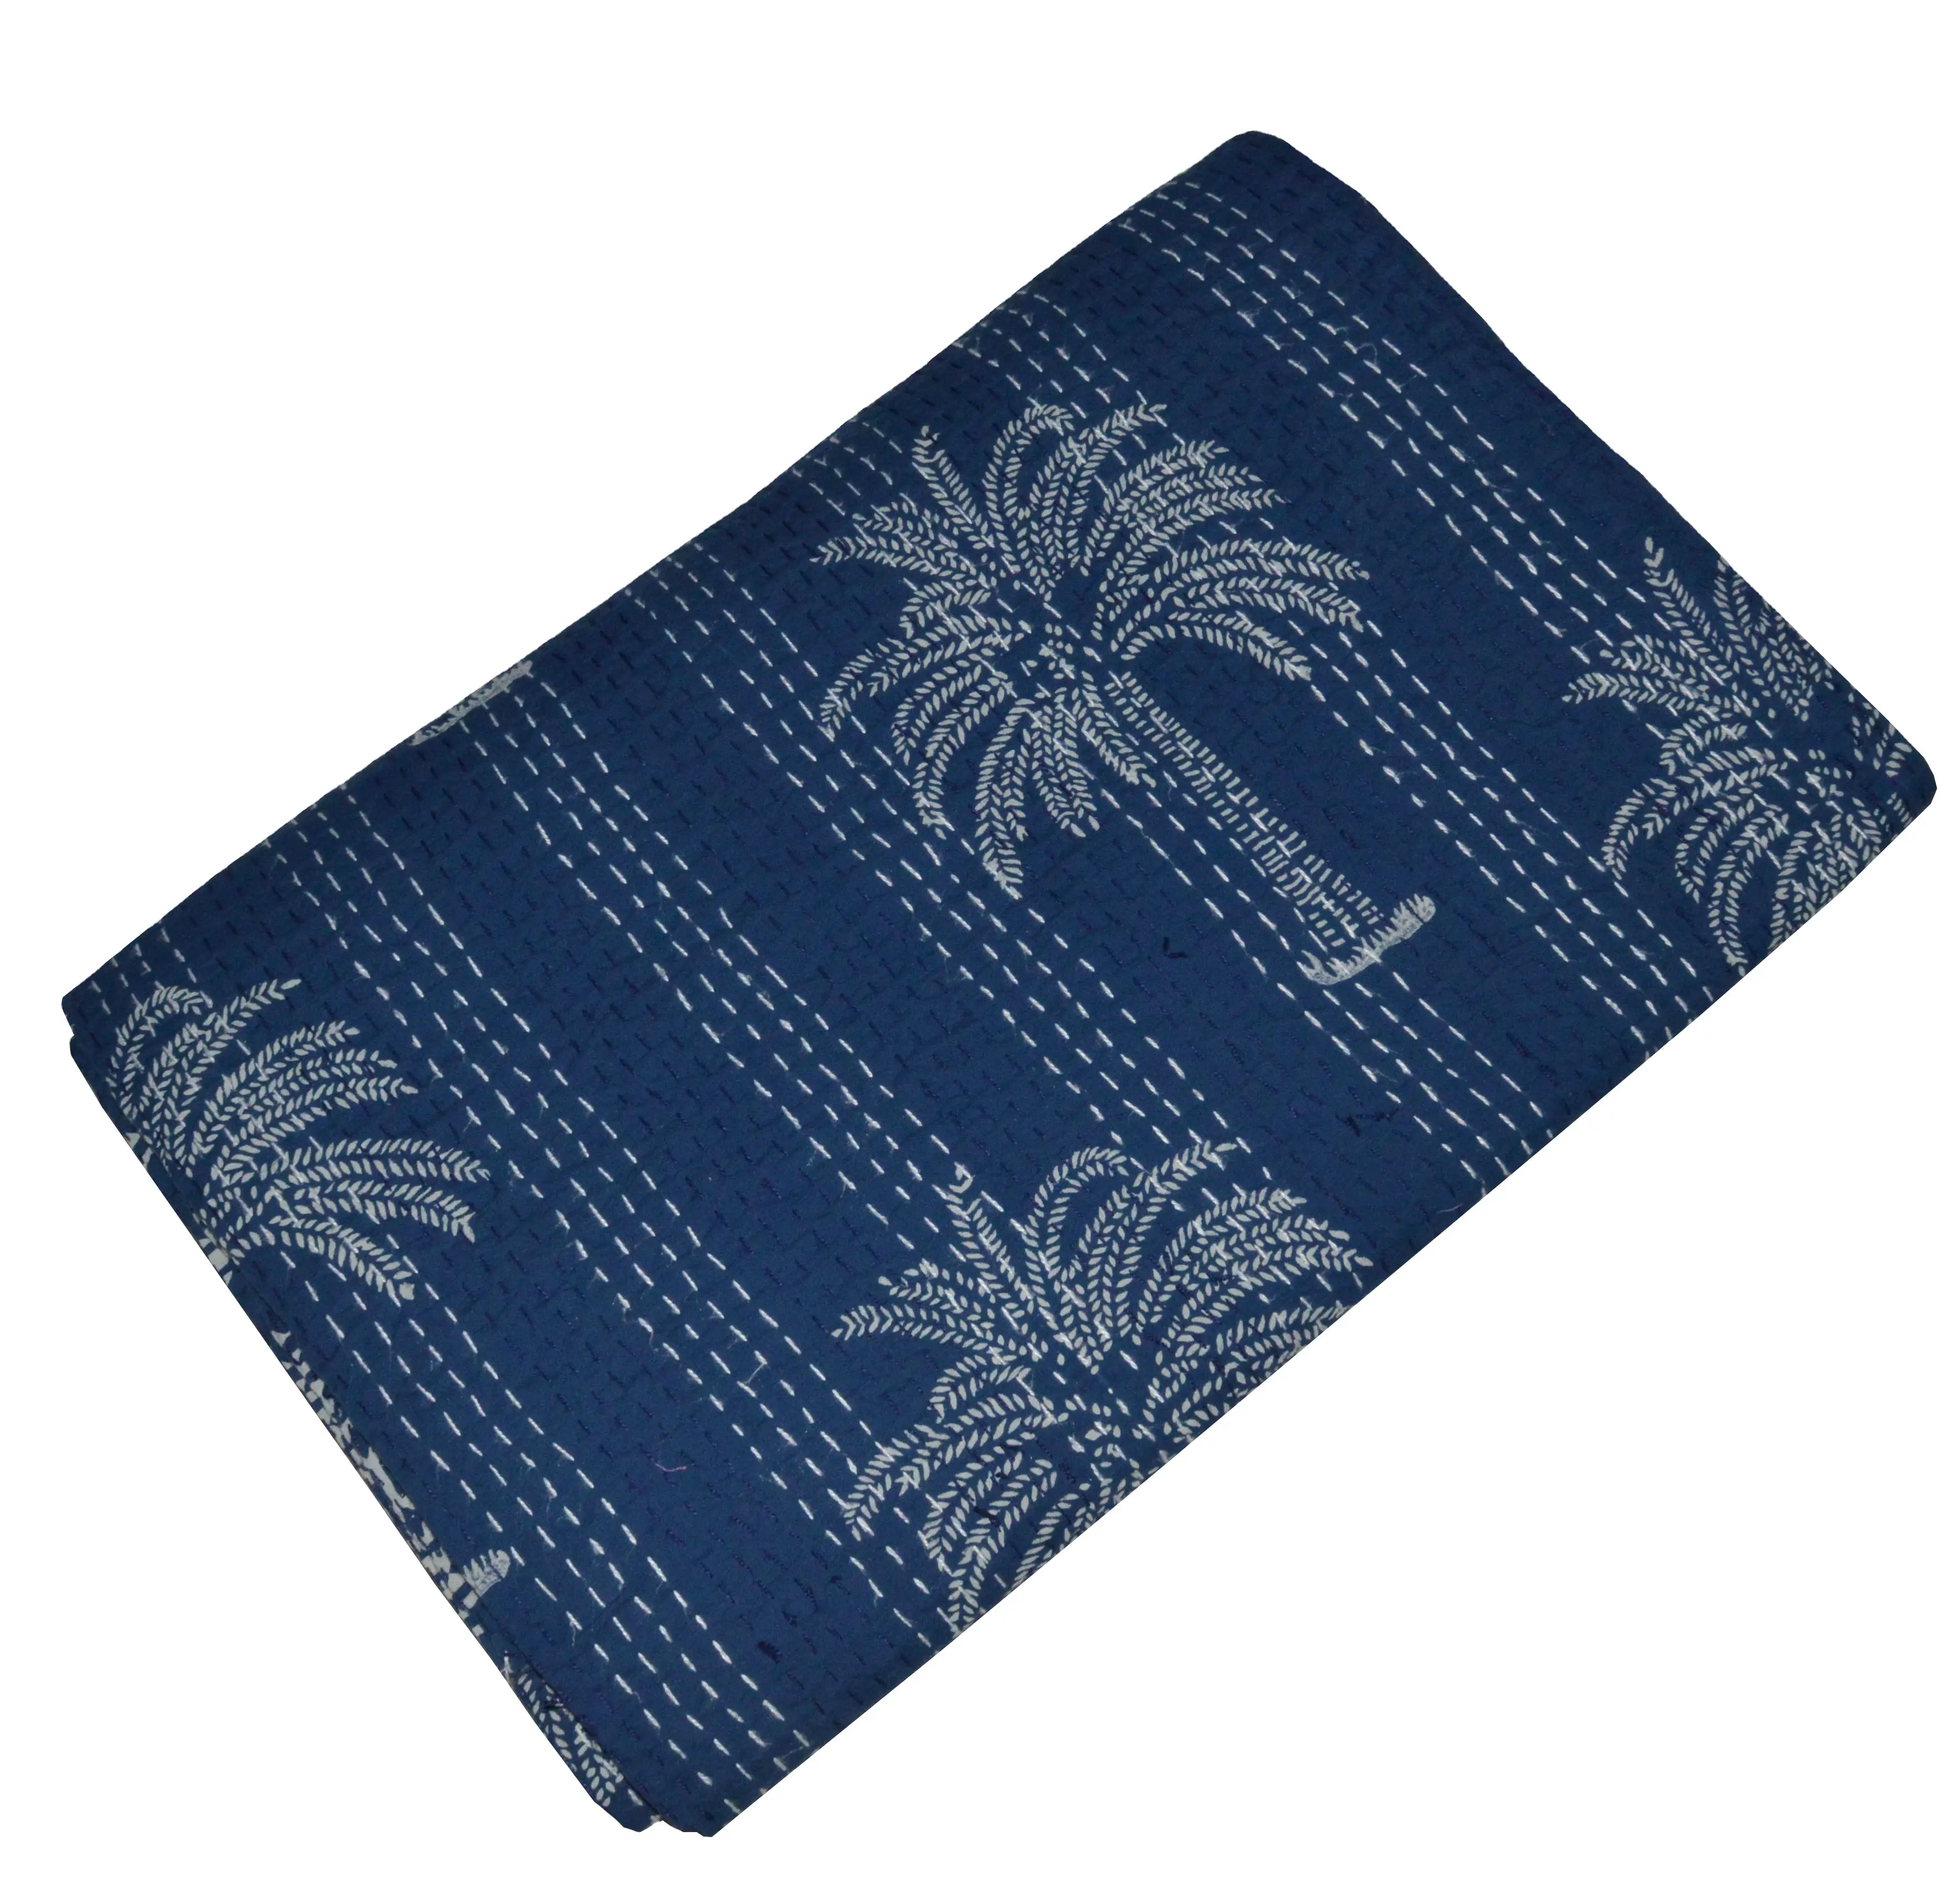 Indigo Palm Tree Print King Size Kantha Quilt Indian Handgemaakte Katoenen Sprei Beddengoed